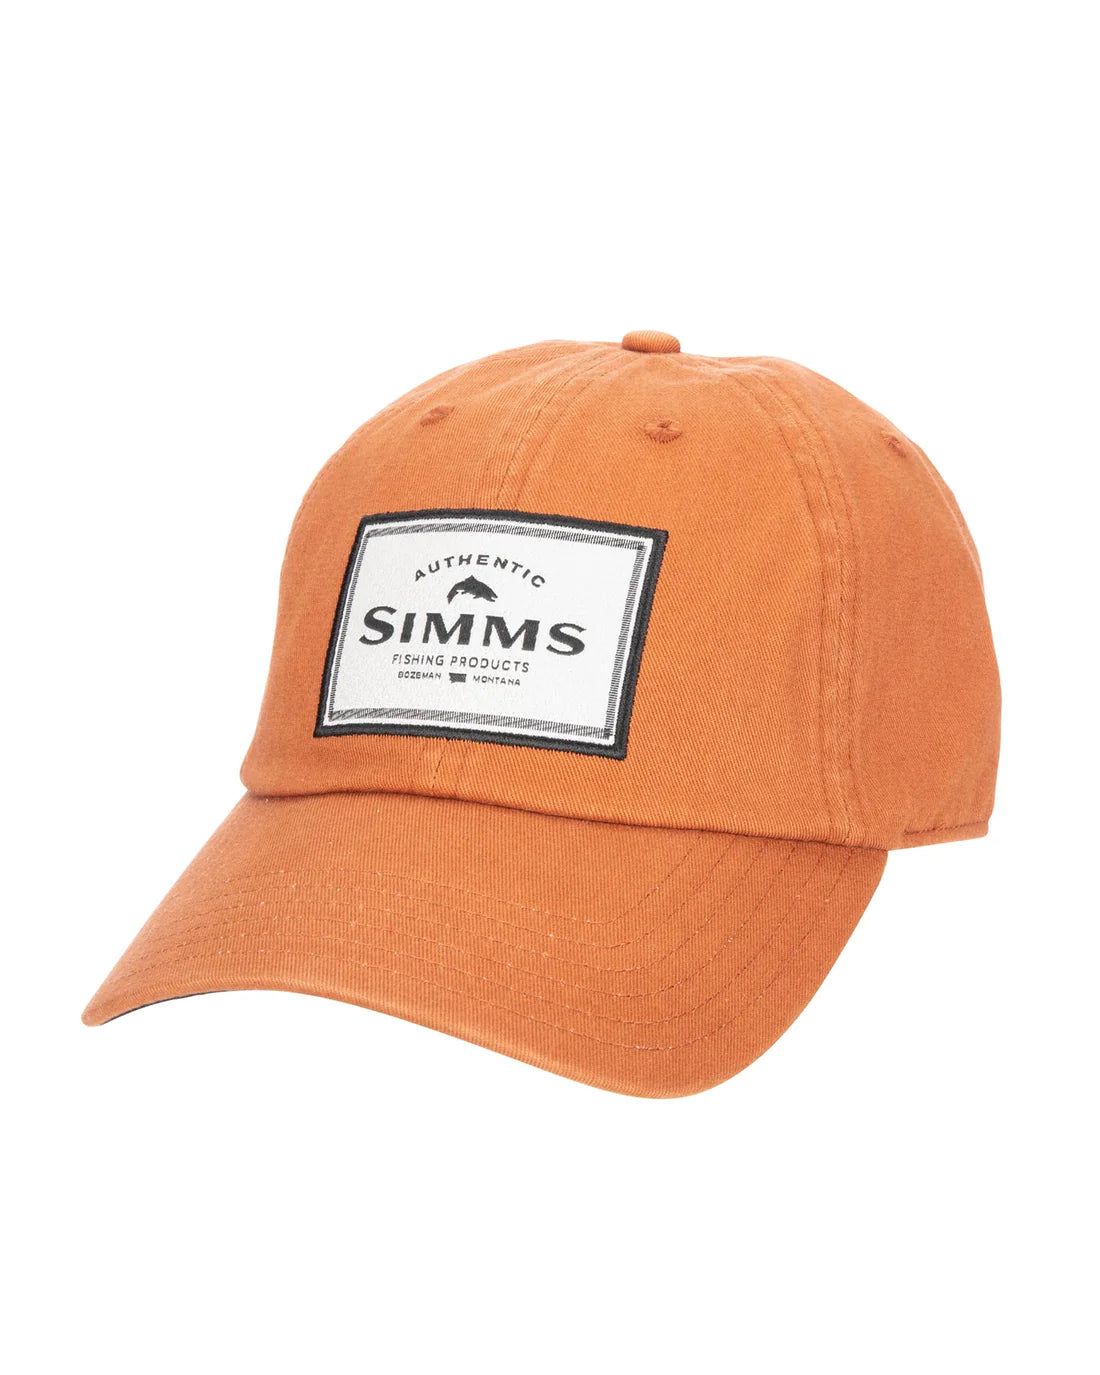 Simms Single Haul Cap - OSFM / ORANGE - Mansfield Hunting & Fishing - Products to prepare for Corona Virus